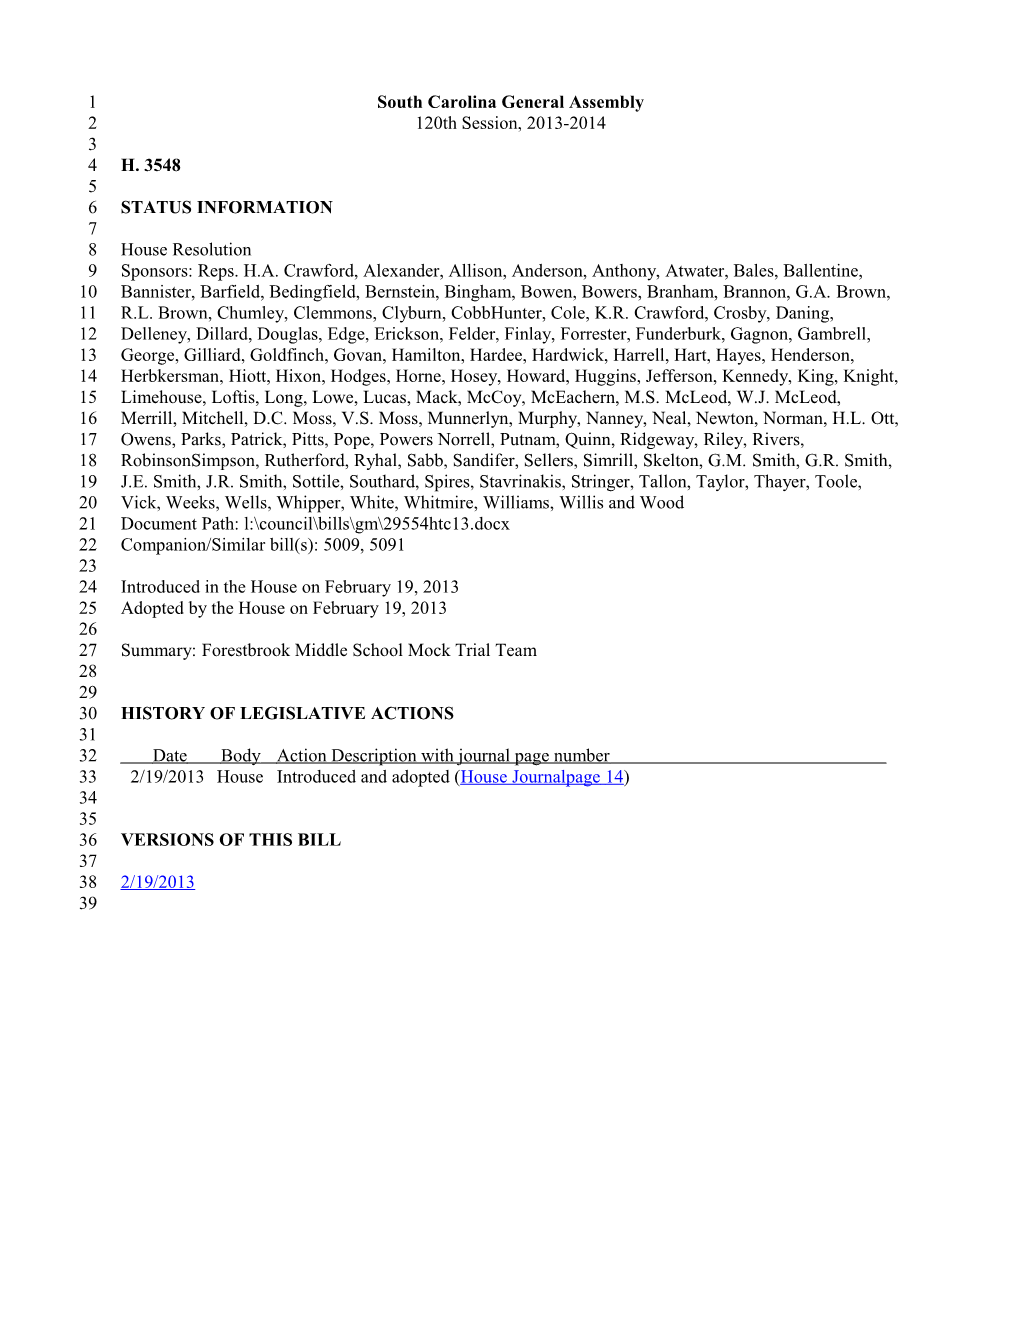 2013-2014 Bill 3548: Forestbrook Middle School Mock Trial Team - South Carolina Legislature